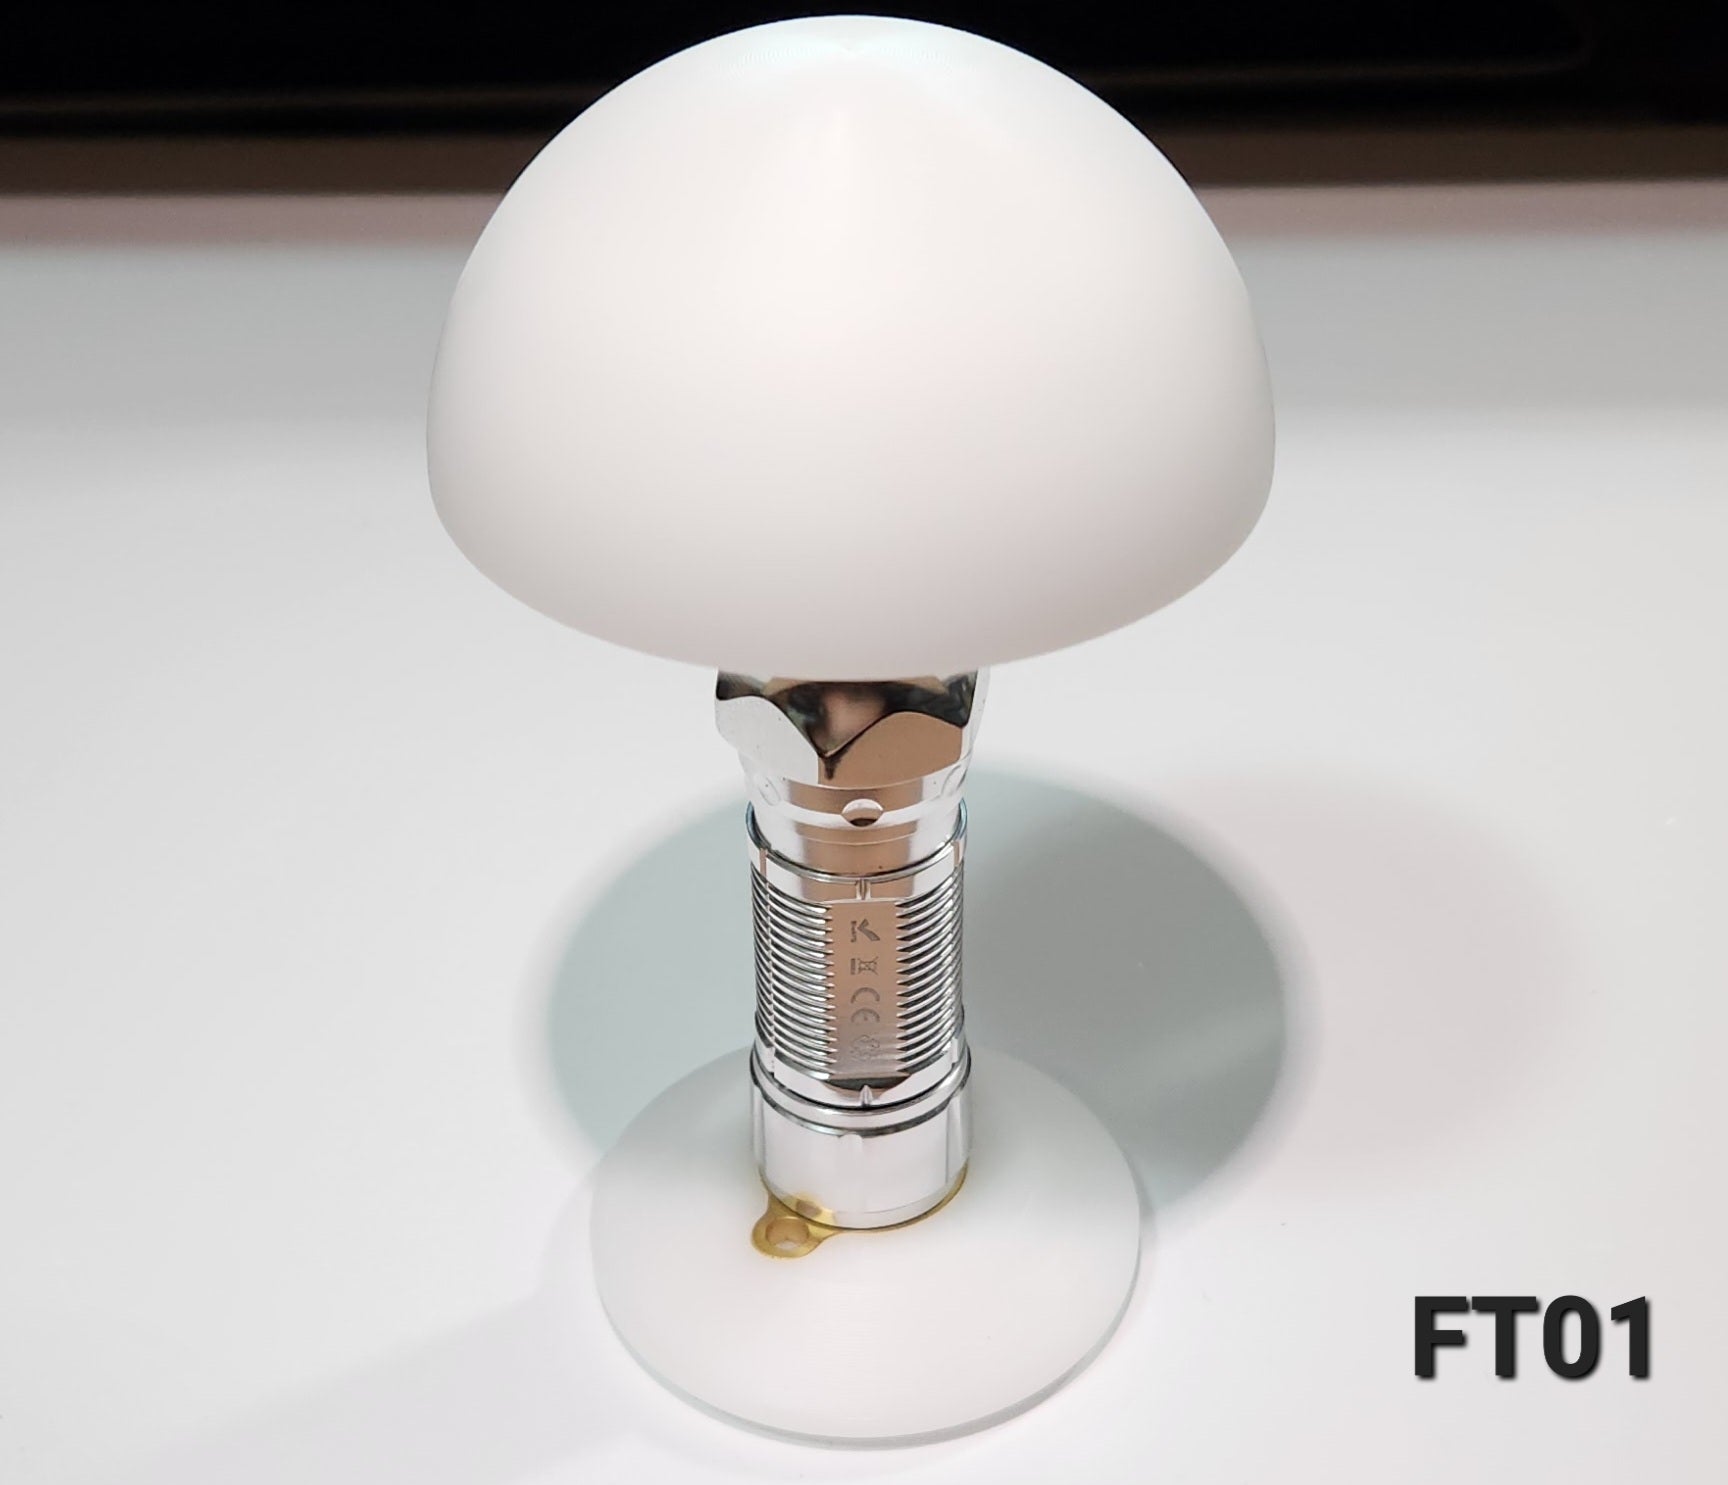 Mateminco FT01 FT02 Compact LED Flashlight